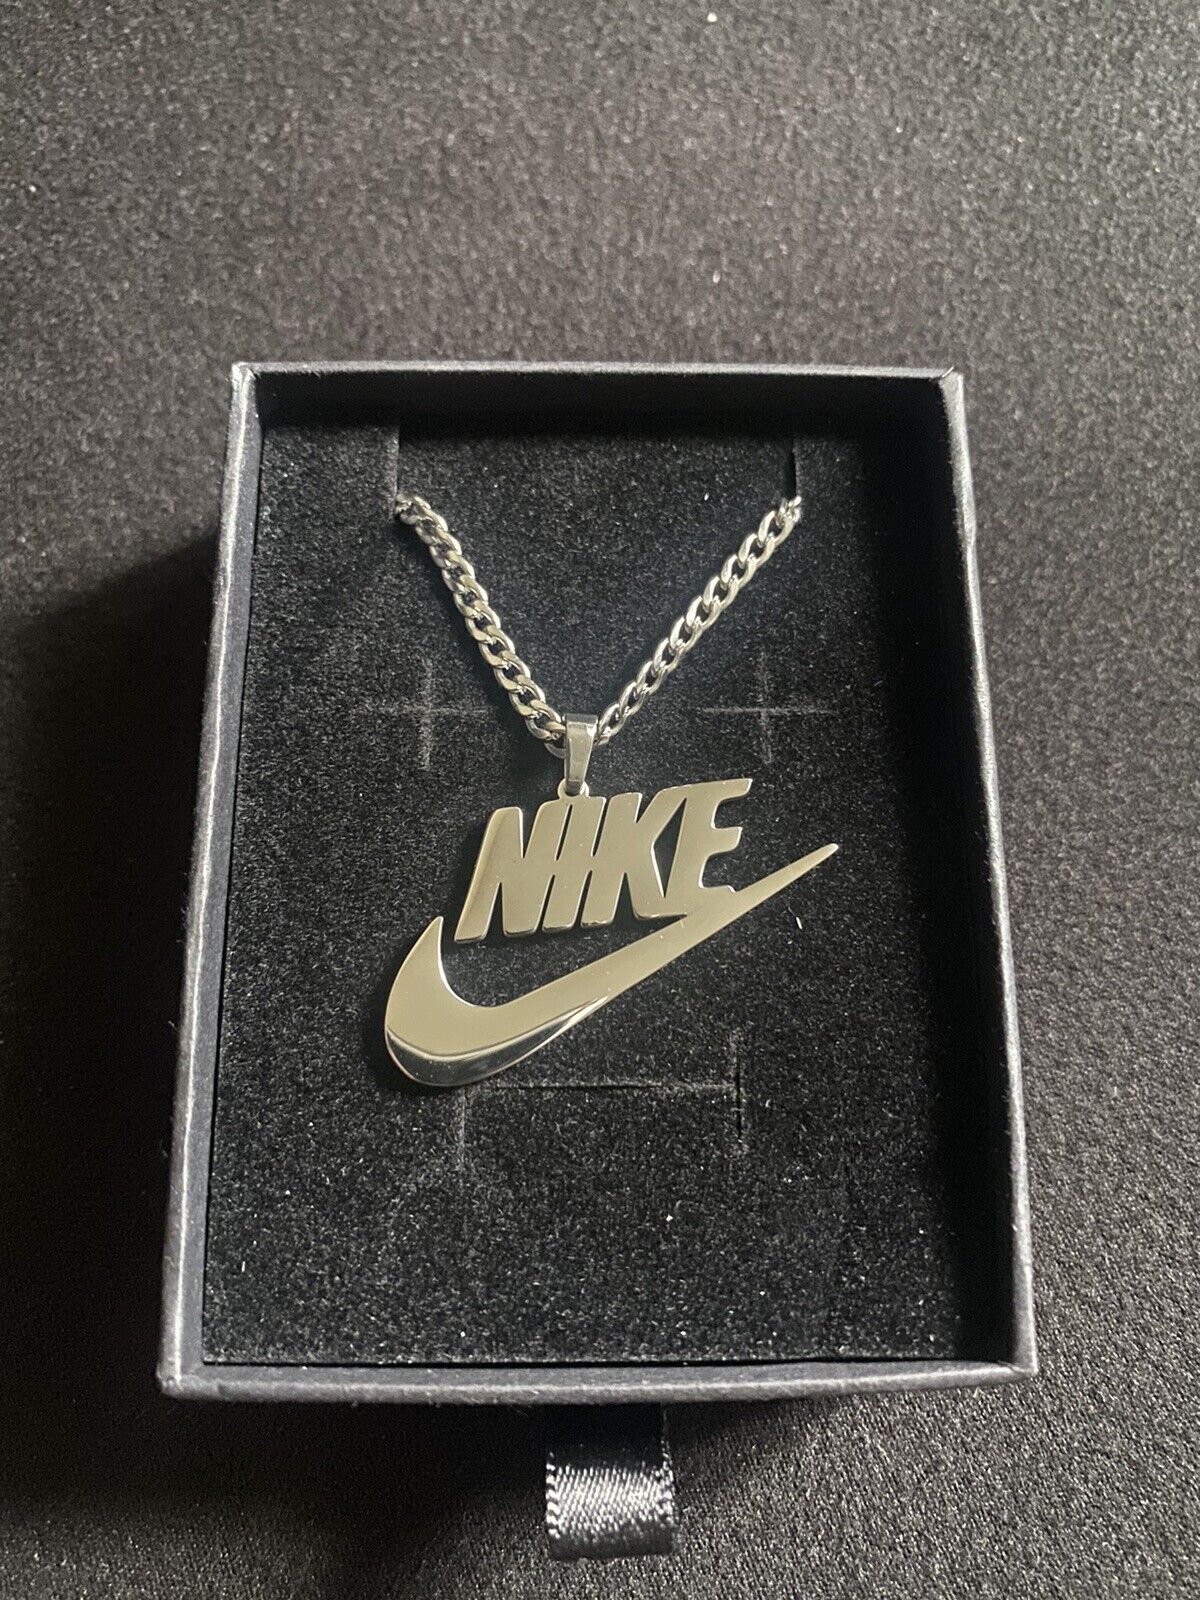 NIKE - Silver necklace, lava